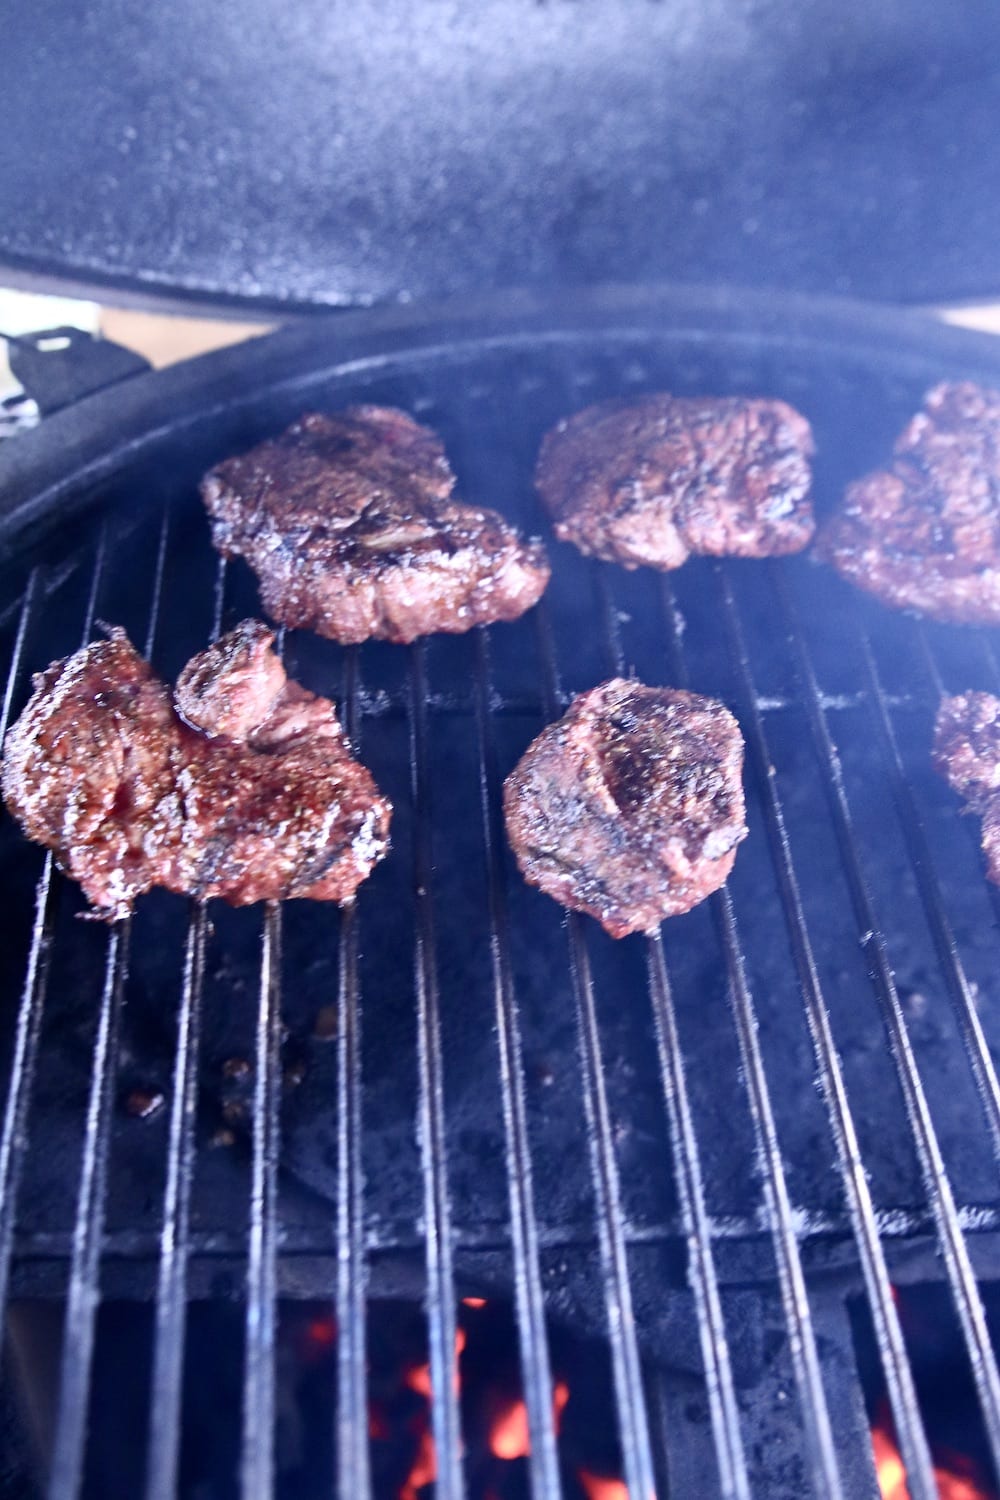 grilling filet mignon steaks